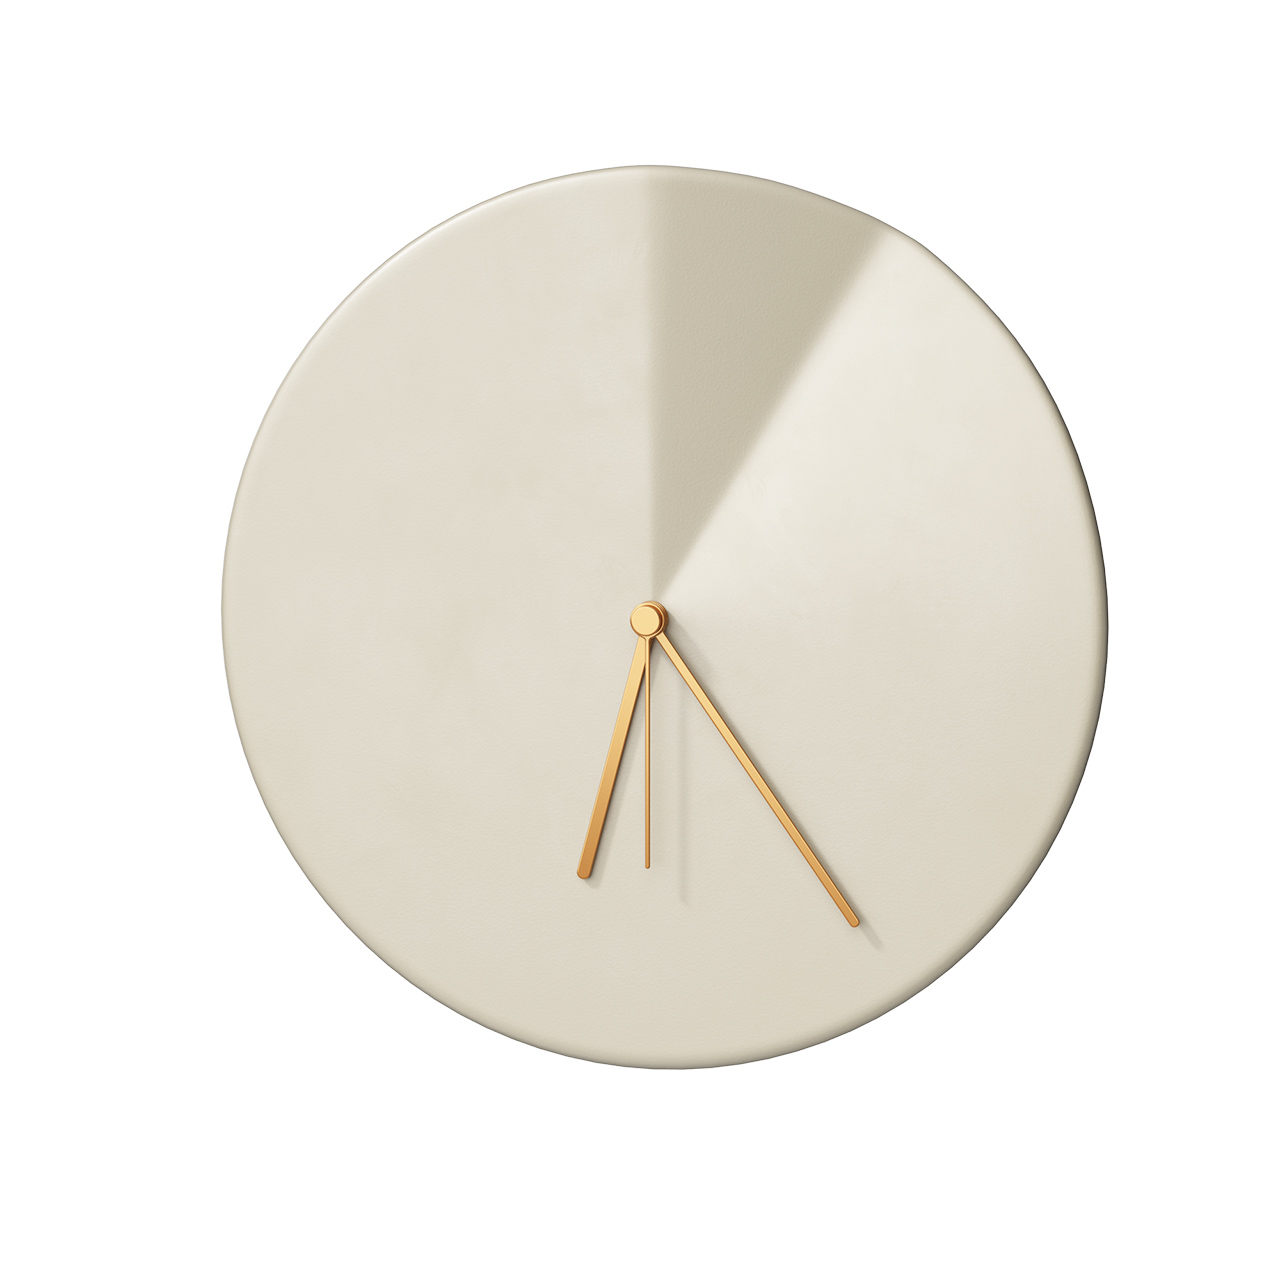 Oree Ceramic Wall Clock by Ocrum